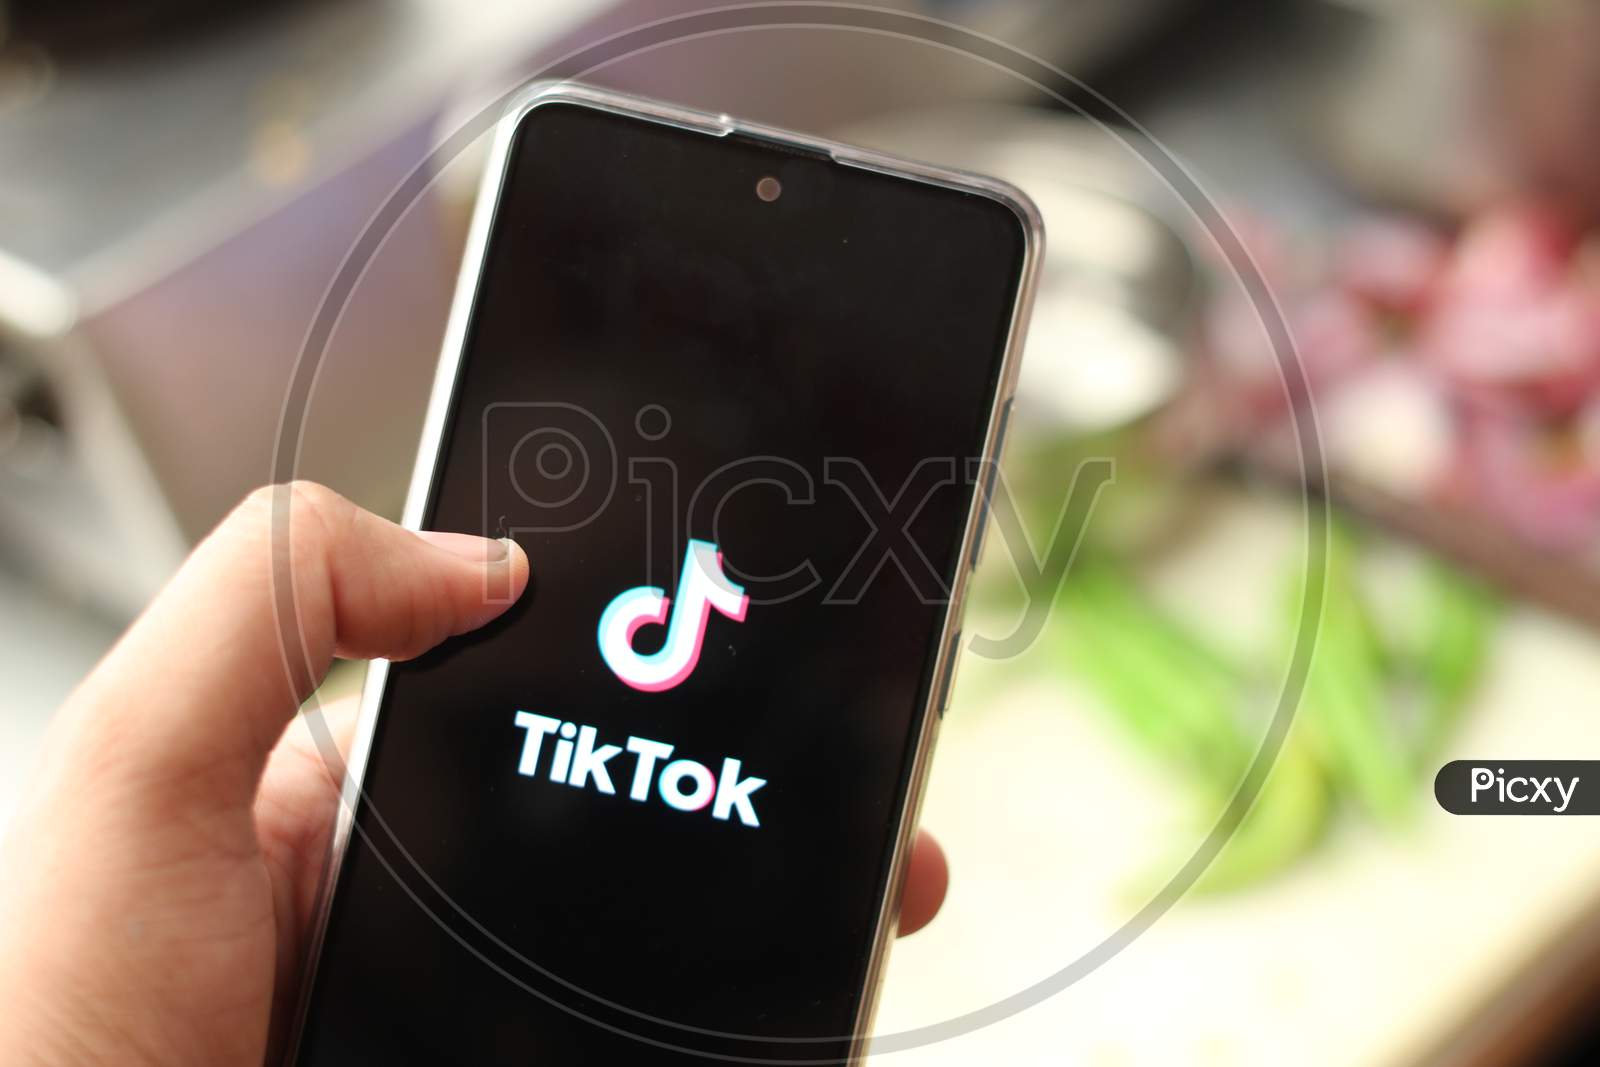 Tiktok application on Samsung smartphone